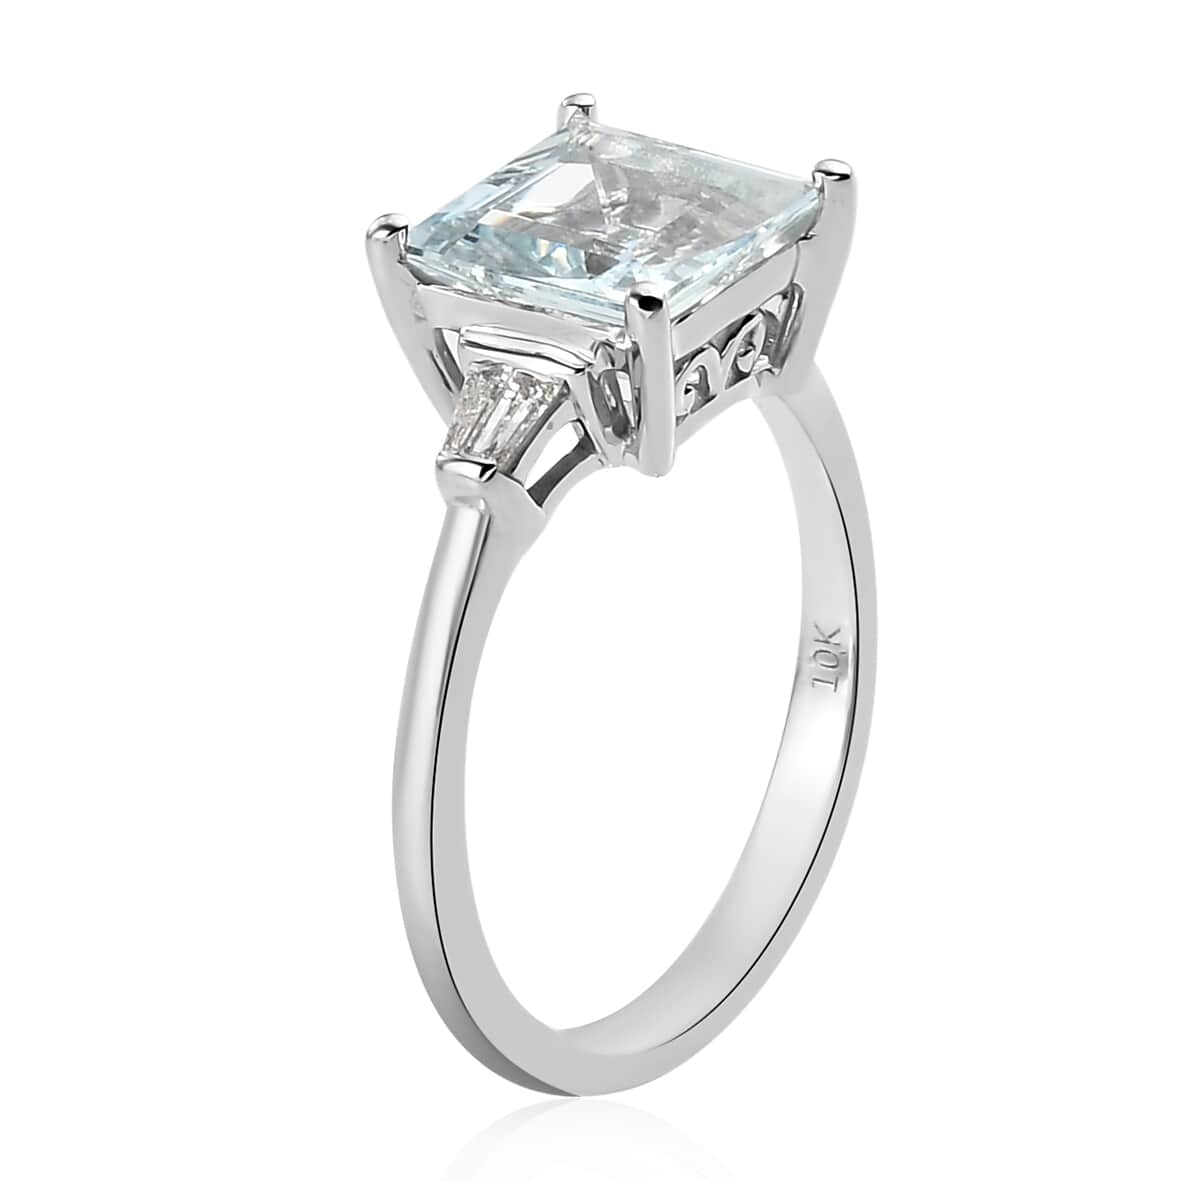 Luxoro 10K White Gold Premium Espirito Santo Aquamarine and Diamond Ring (Size 6.0) 2.65 Grams 2.25 ctw image number 3